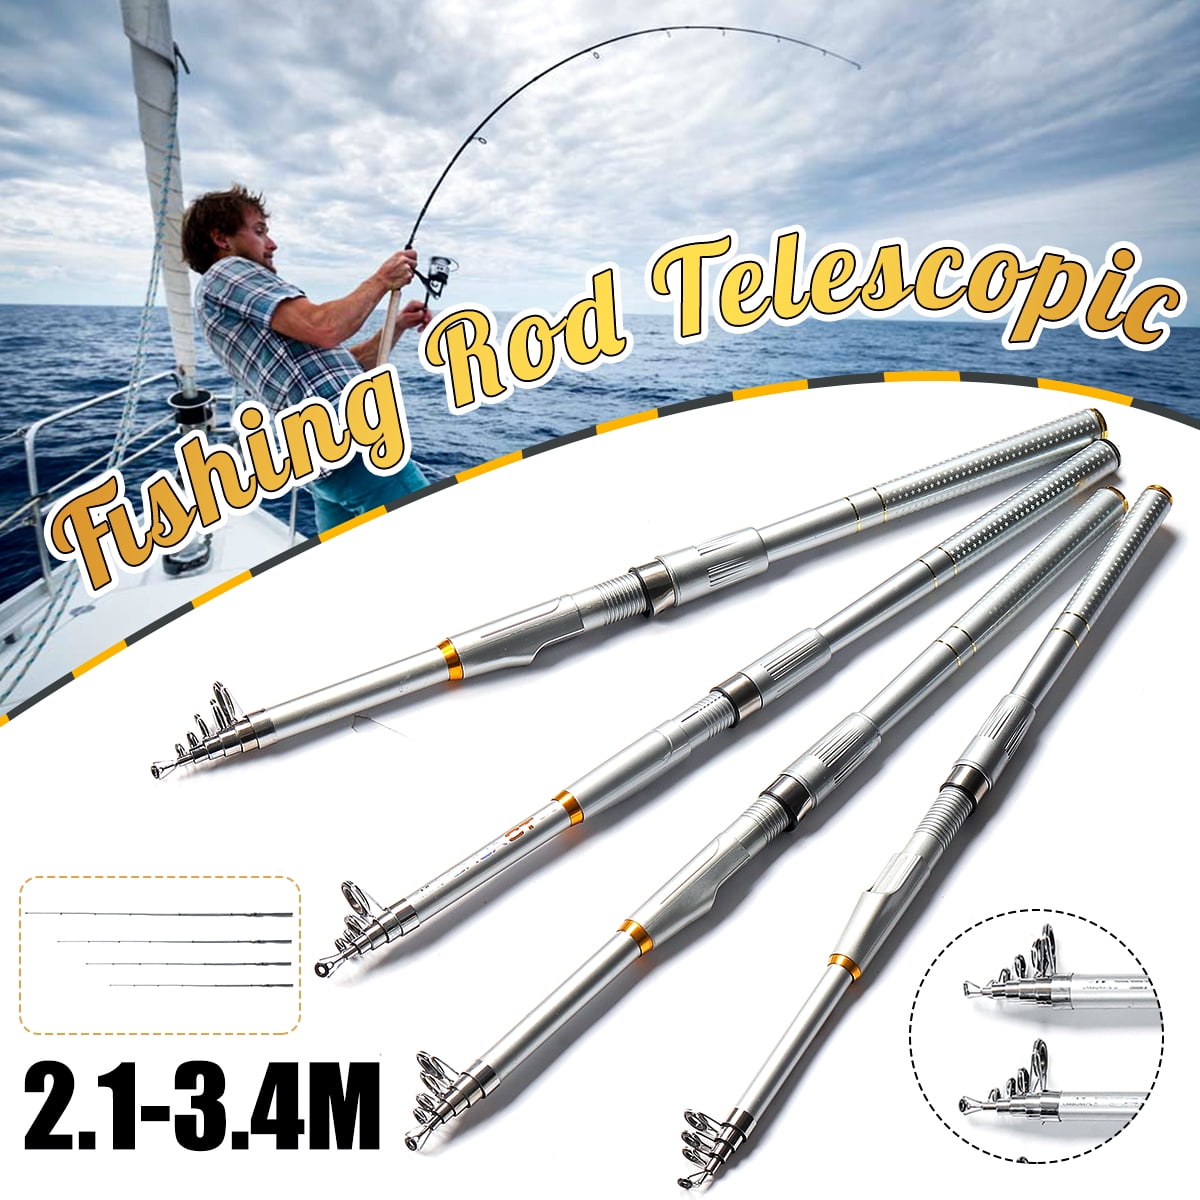 2.1-3.4M Fishing Rod Telescopic Fiberglass Fiber Travel Gear Sea Spinning Pole 